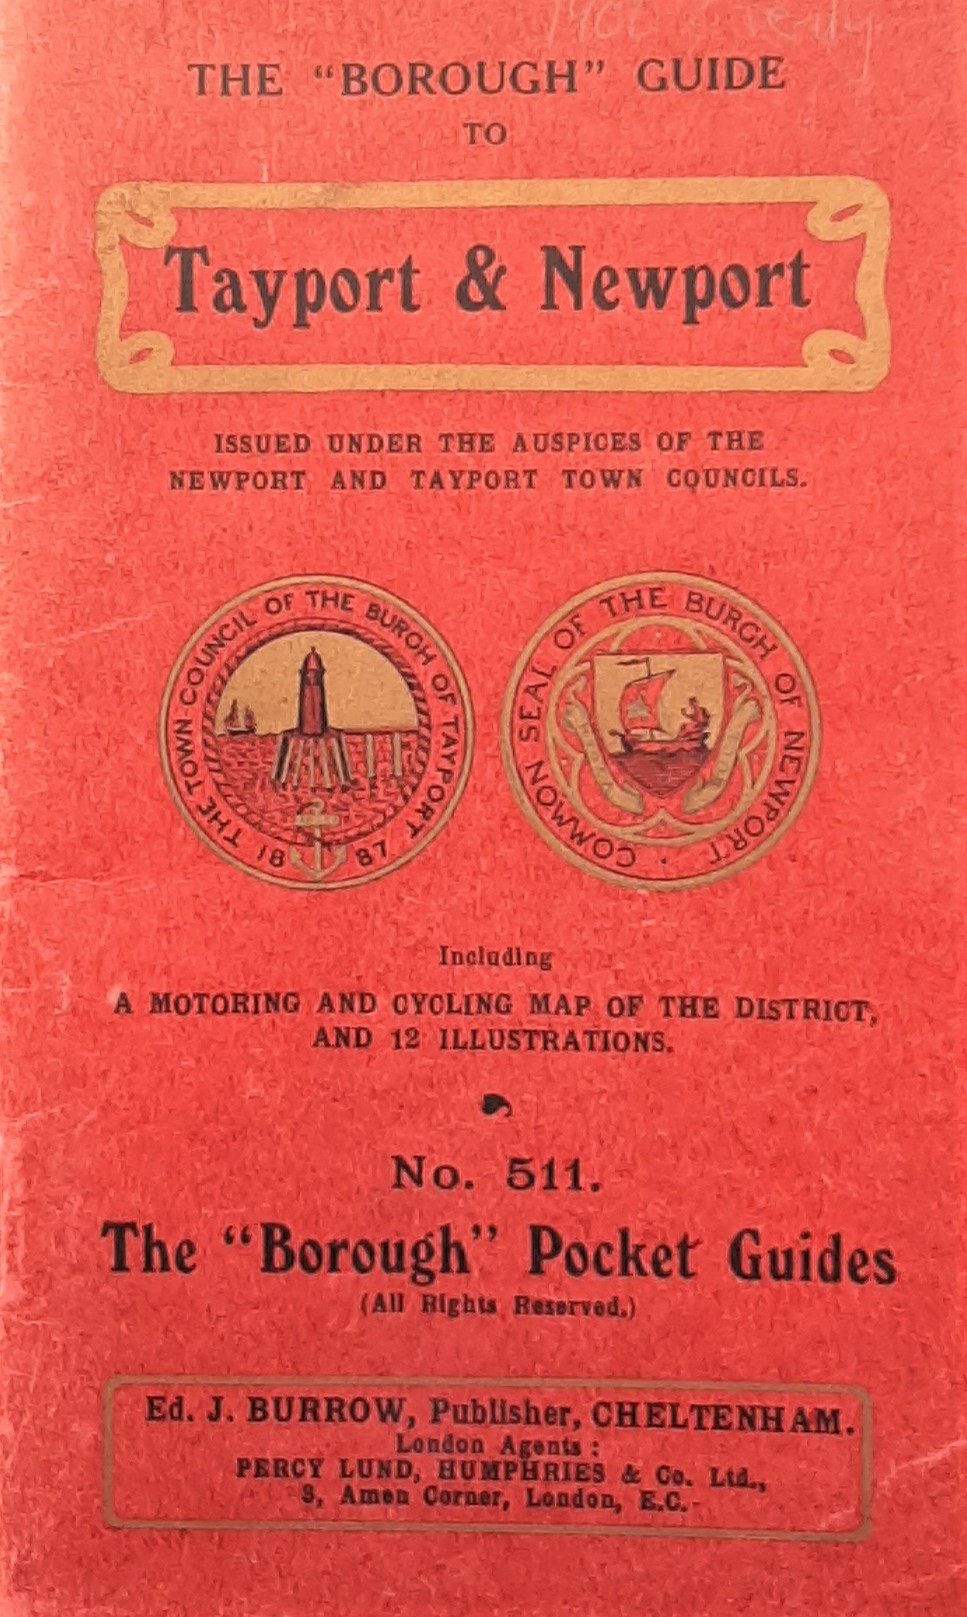 The “Borough” Guide to Tayport & Newport (circa 1909-19) by Ed. J. Burrow